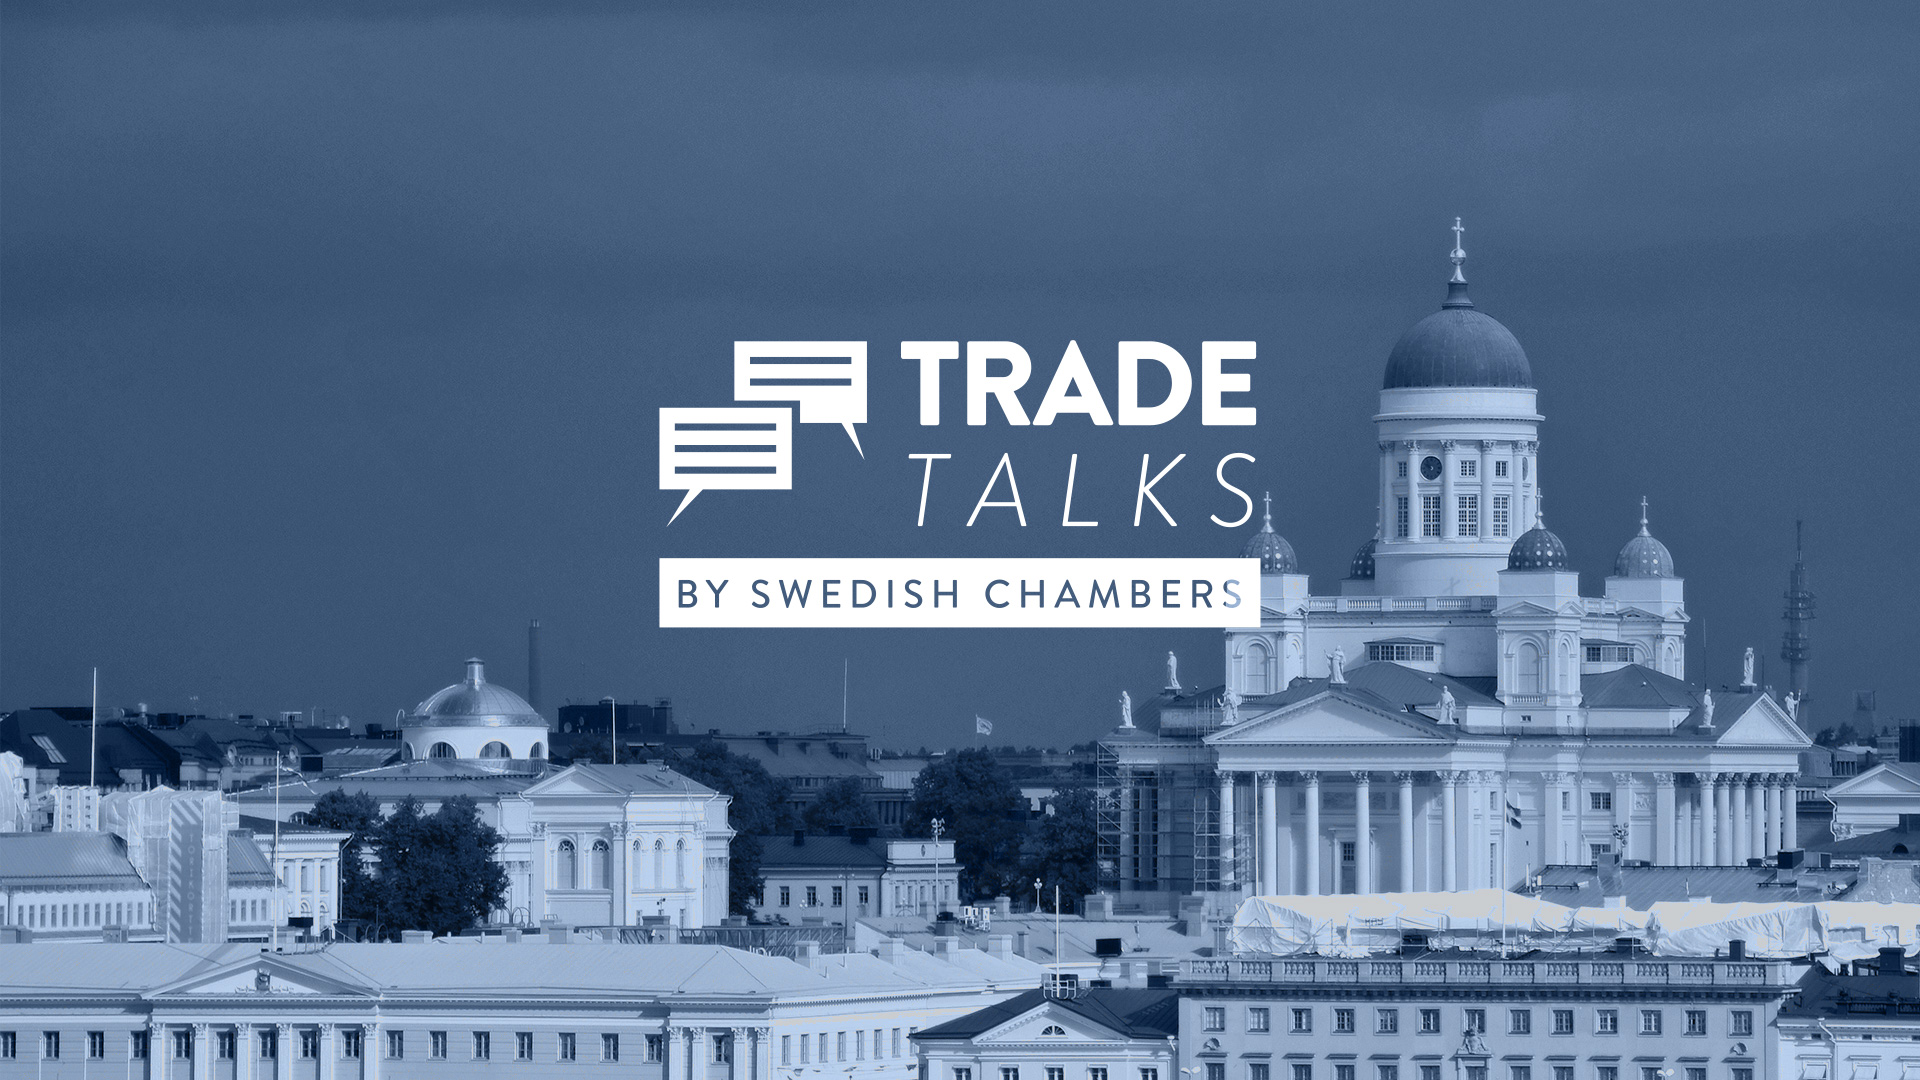 TRADE TALKS by Swedish Chambers - GO FINLAND!